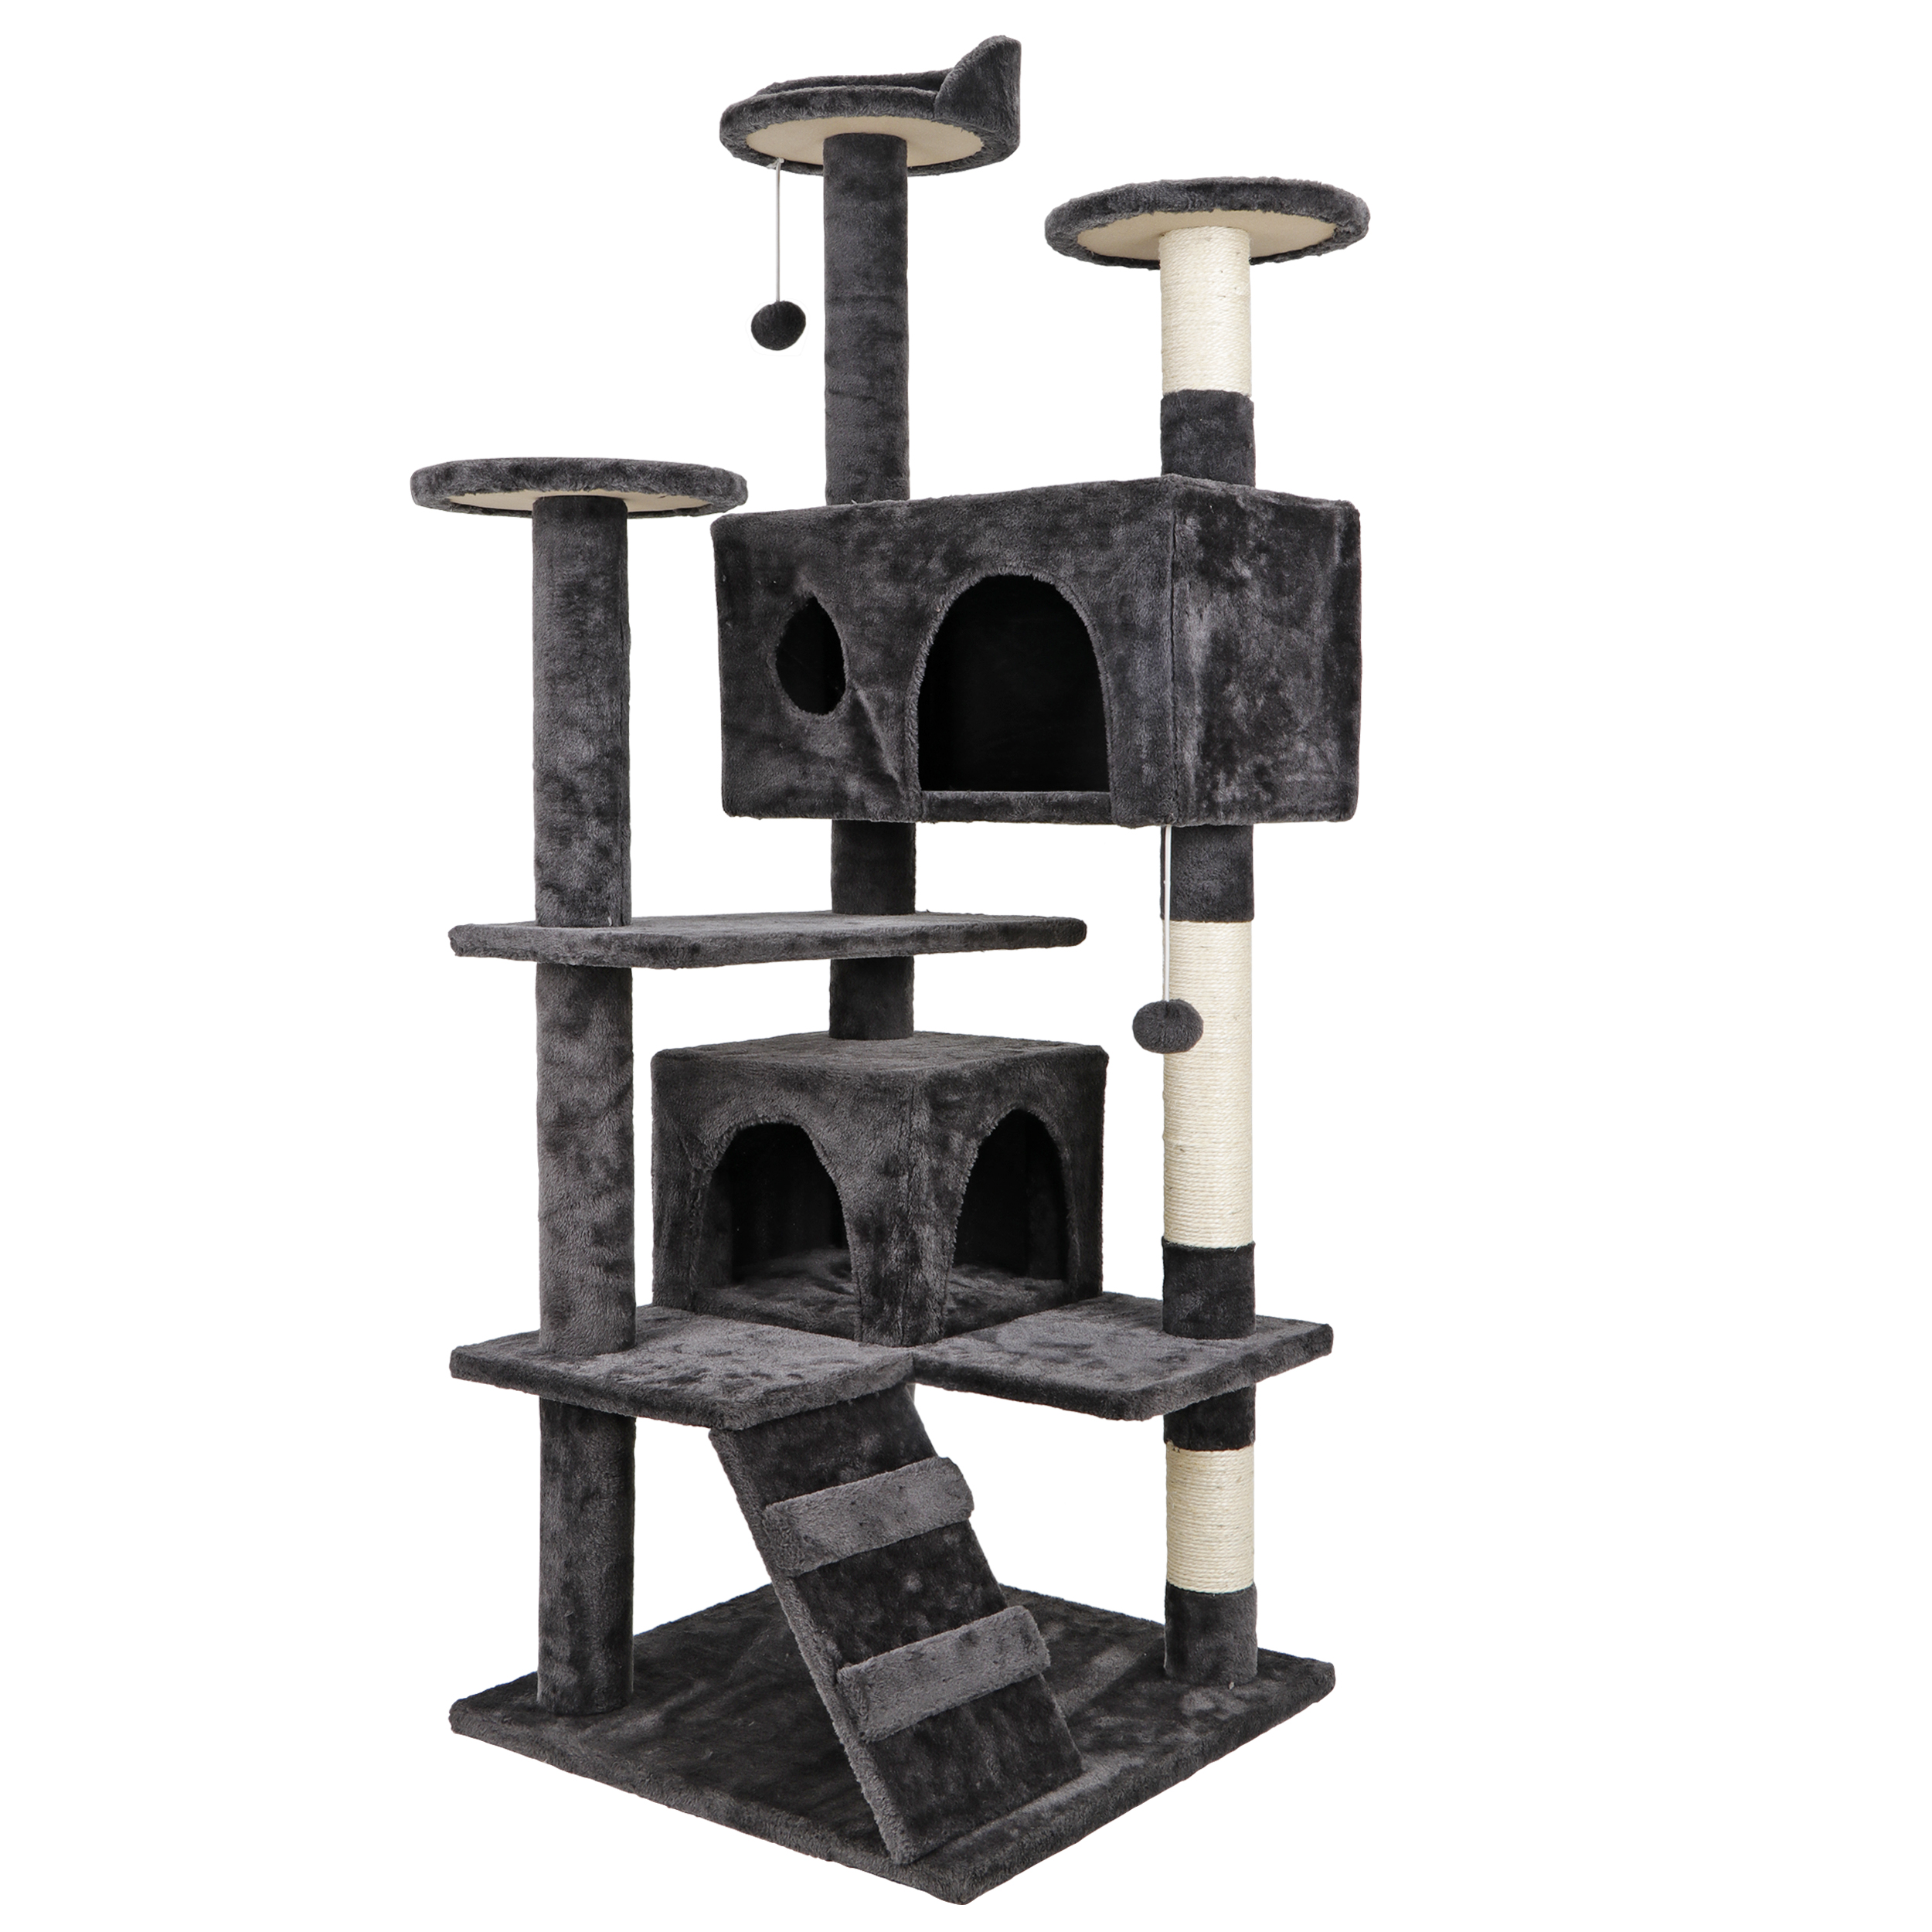 Zenstyle 53-in Cat Tree & Condo Scratching Post Tower, Dark Gray - image 1 of 14